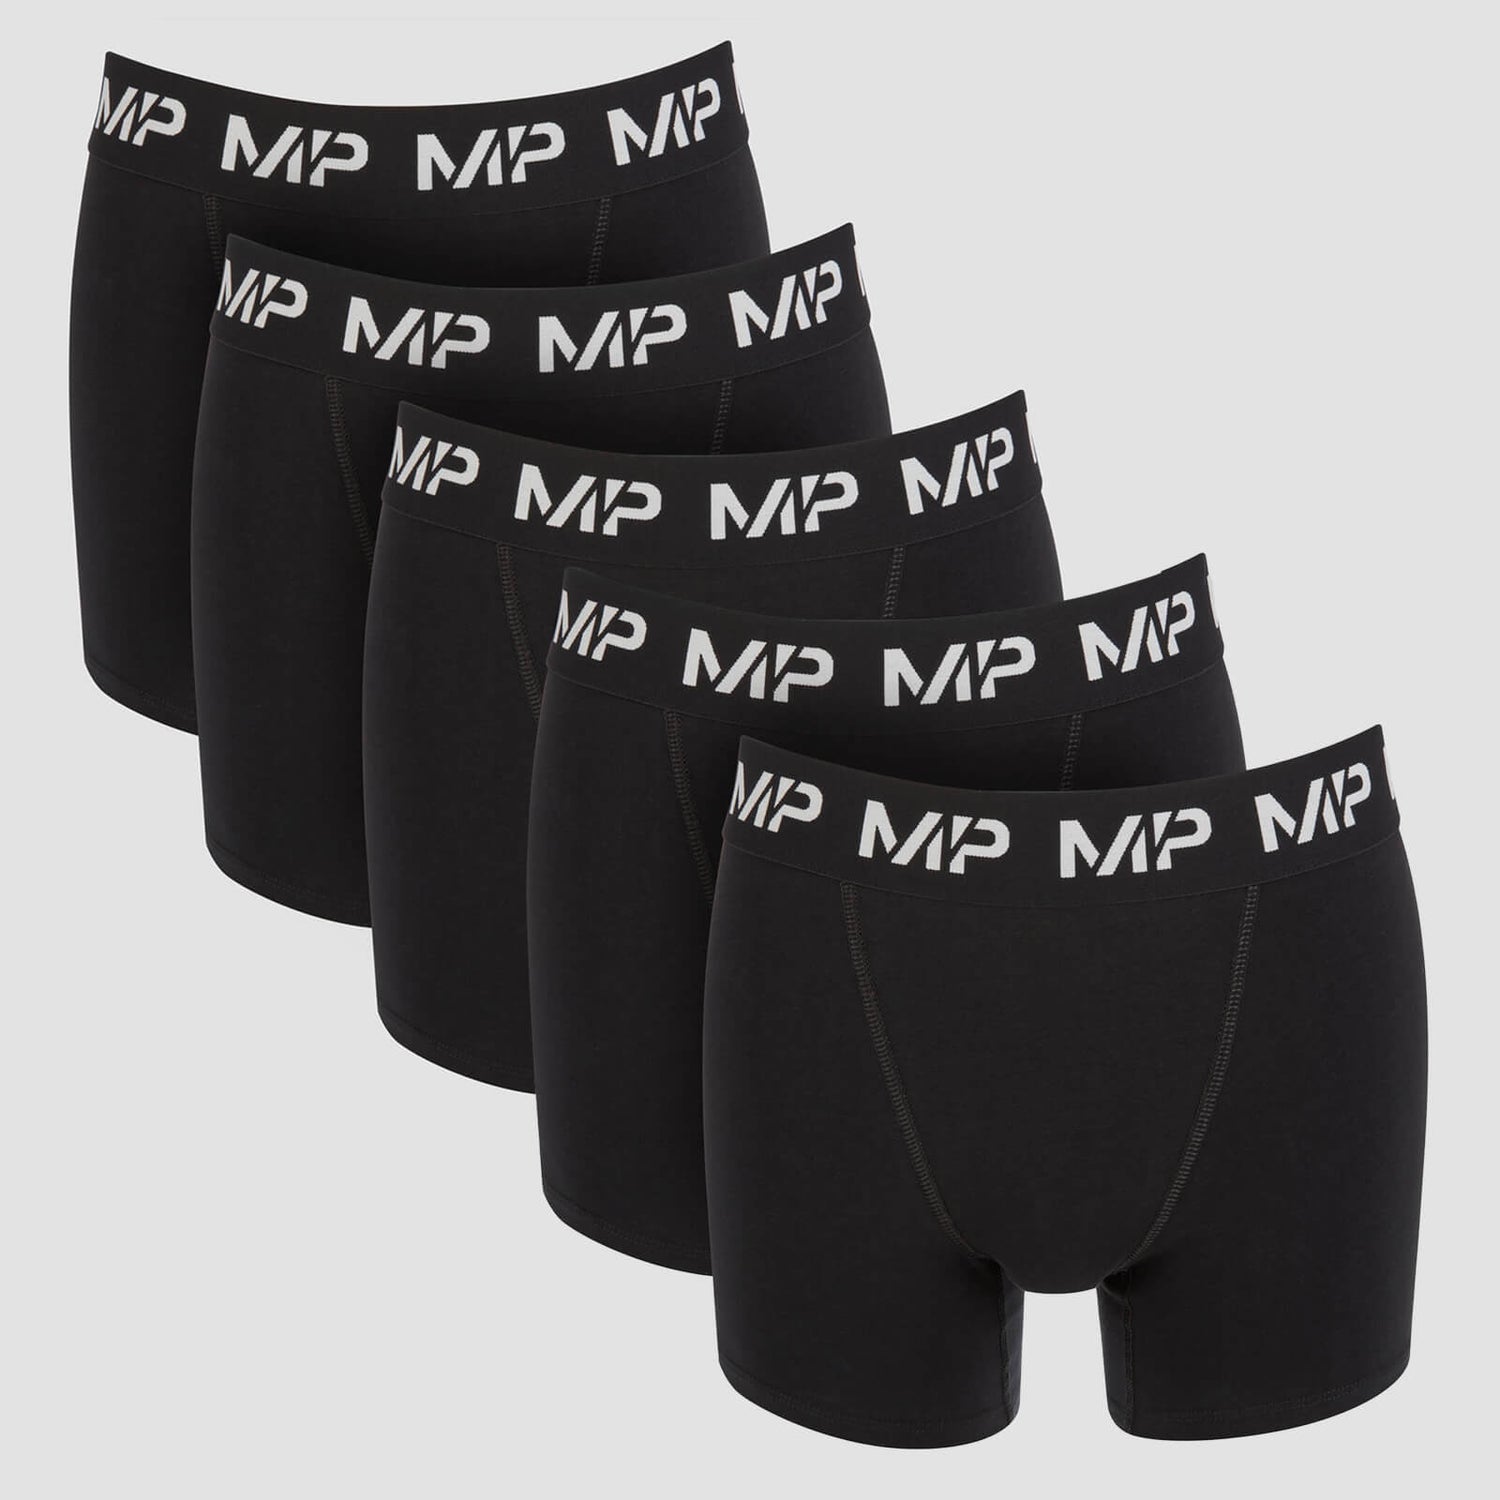 MP Men's Boxers (5 Pack) - Black | MYPROTEIN™